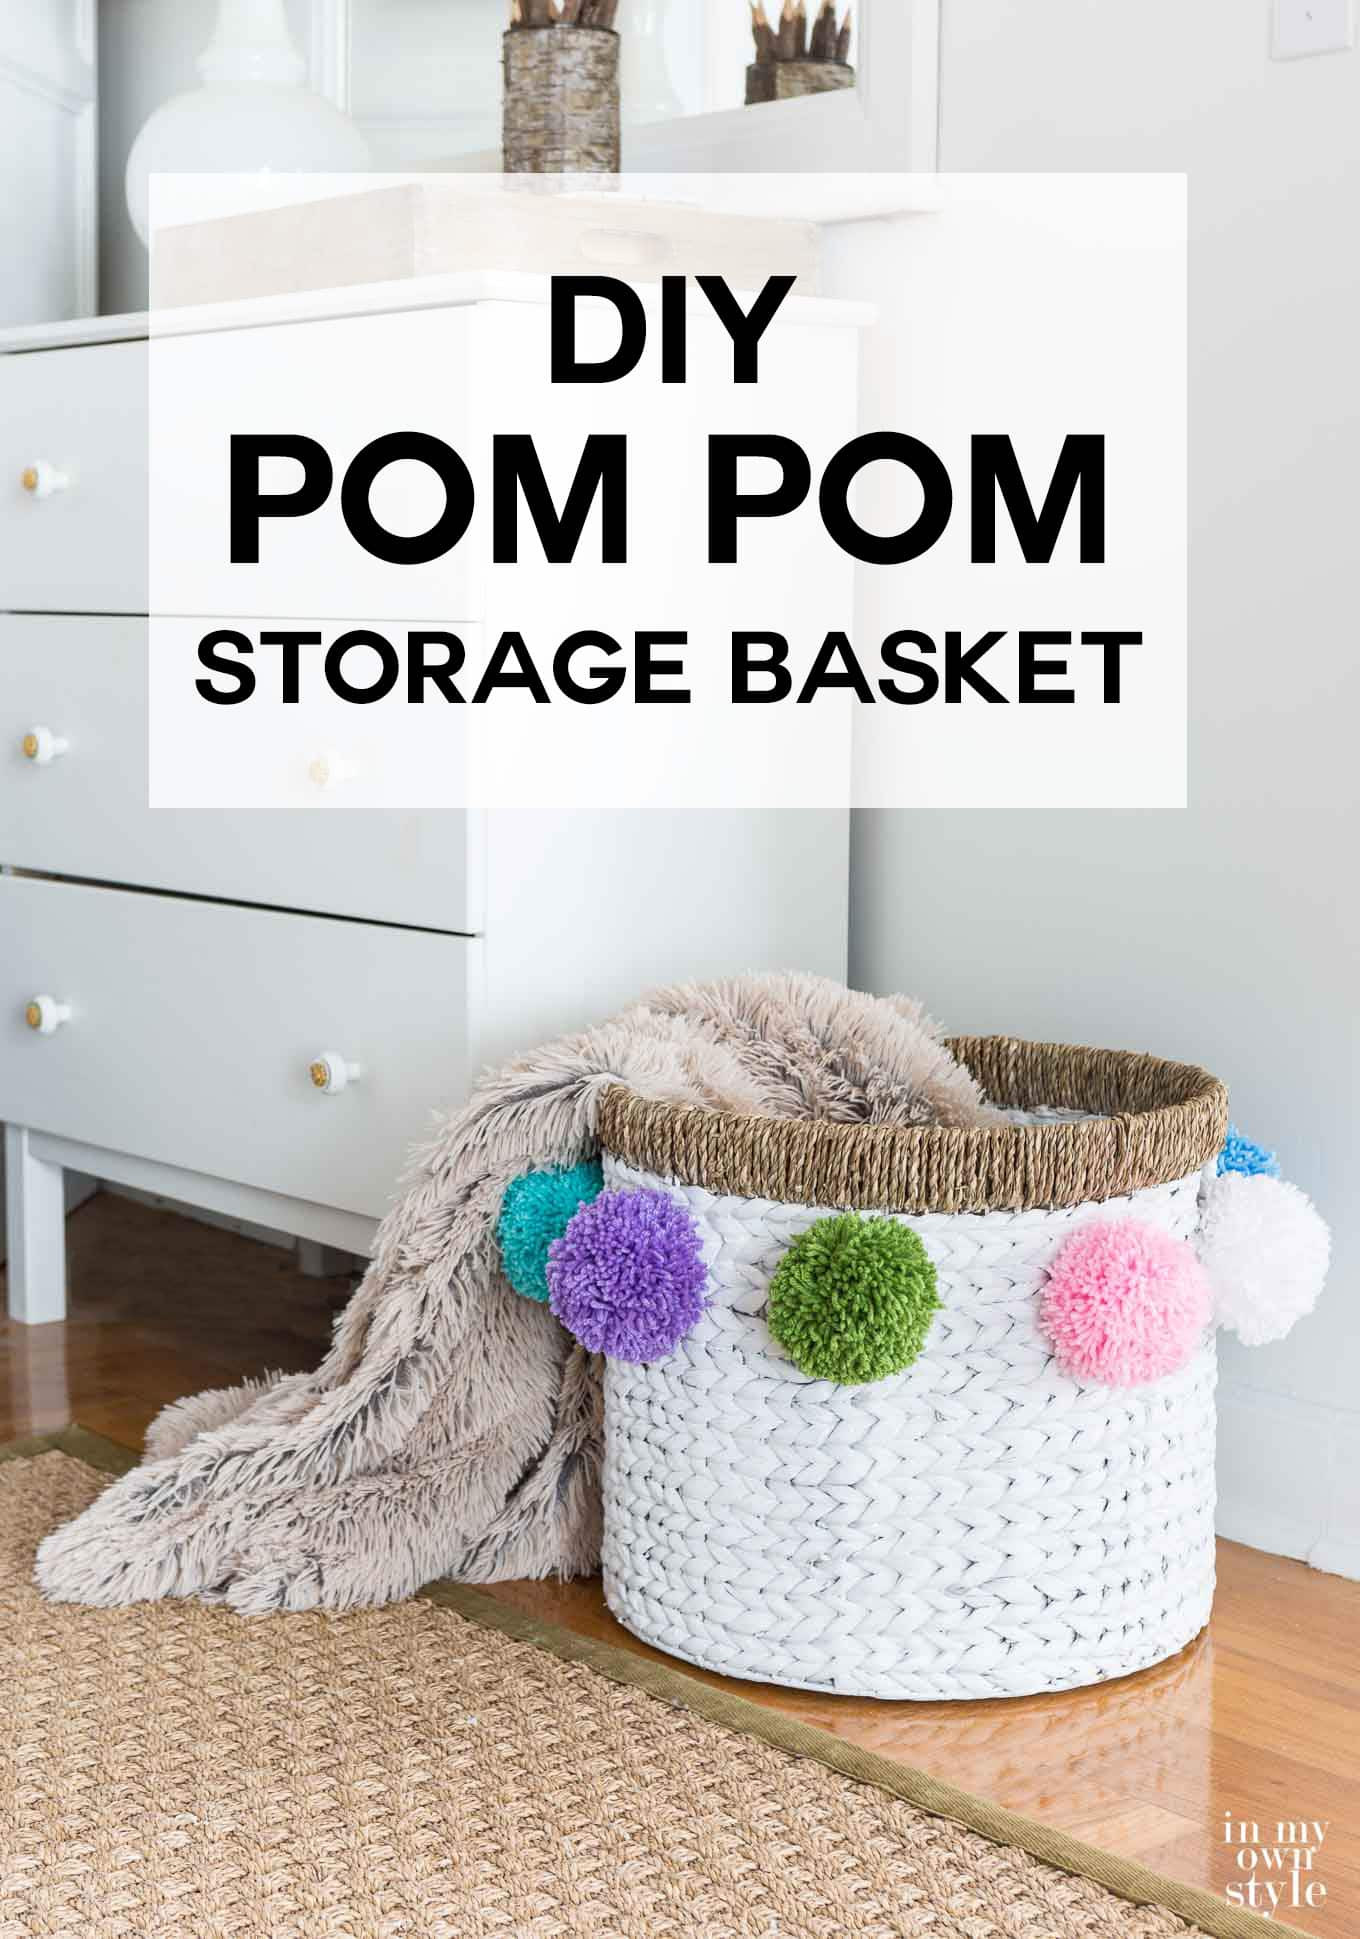 Best ideas about DIY Storage Basket
. Save or Pin Making It My Own Pom Pom Basket Now.